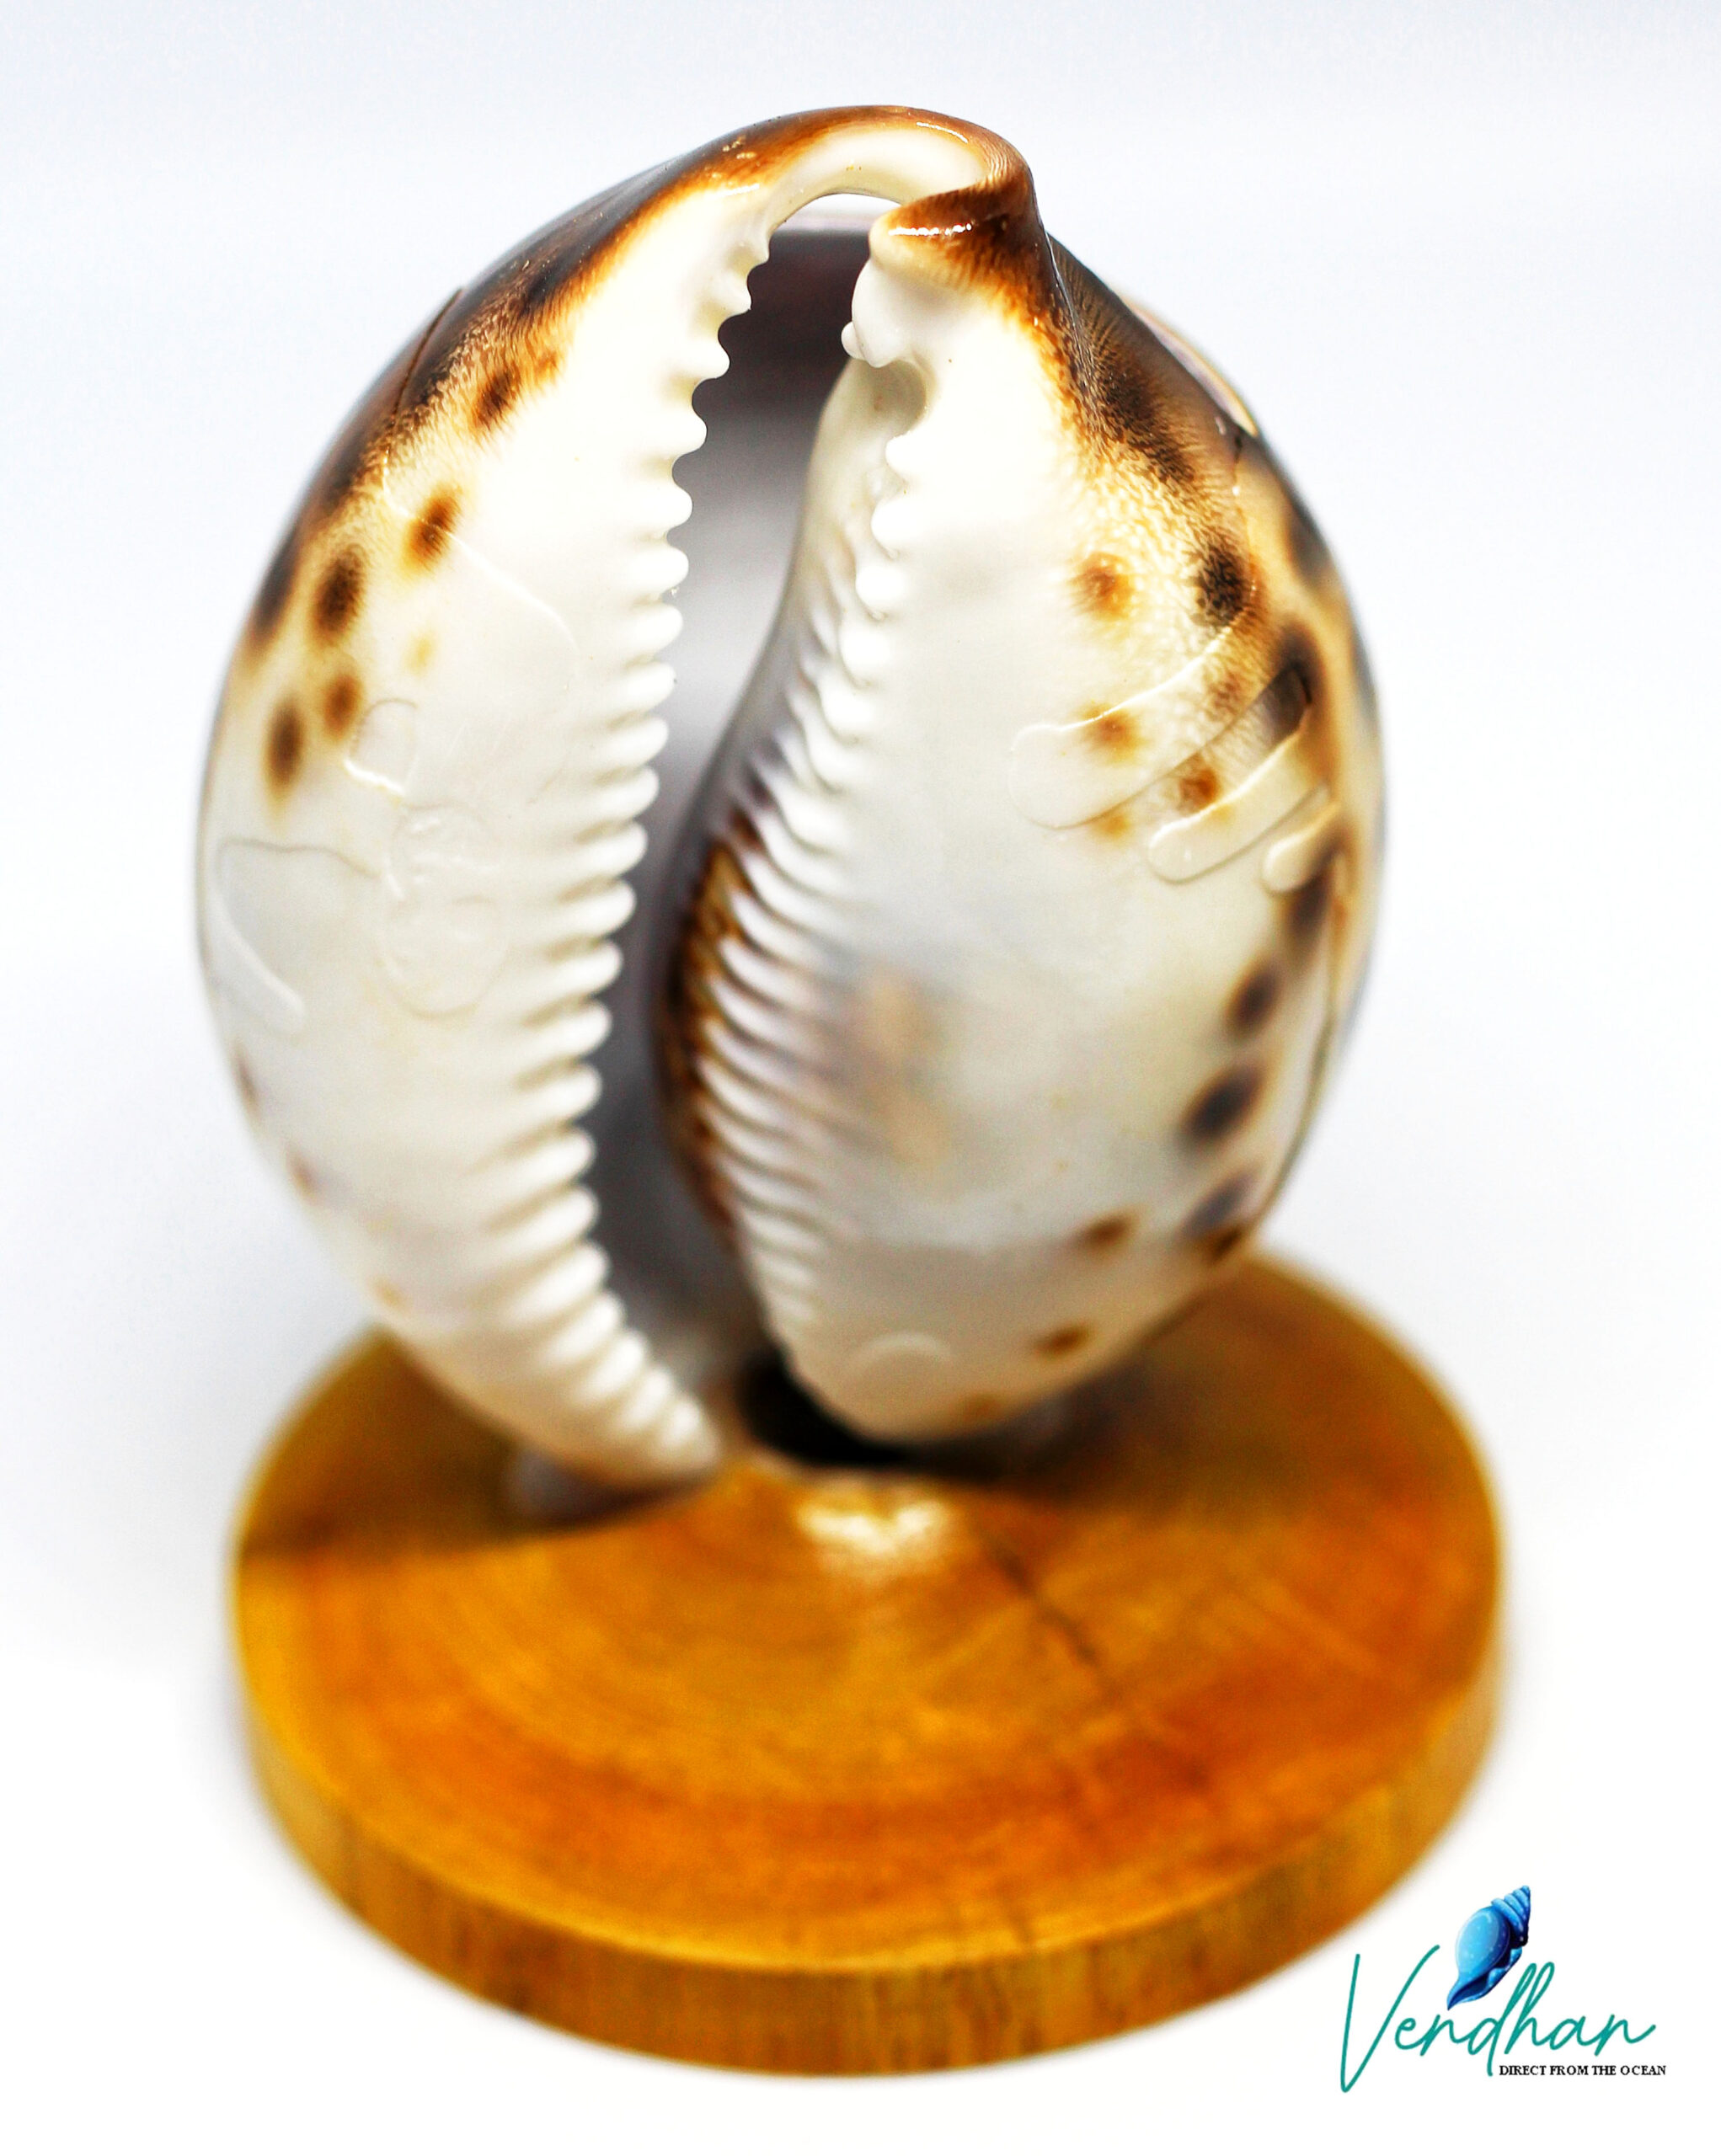 Vendhan Tiger Cowrie Shells Big Size ( Set of 2Pc)